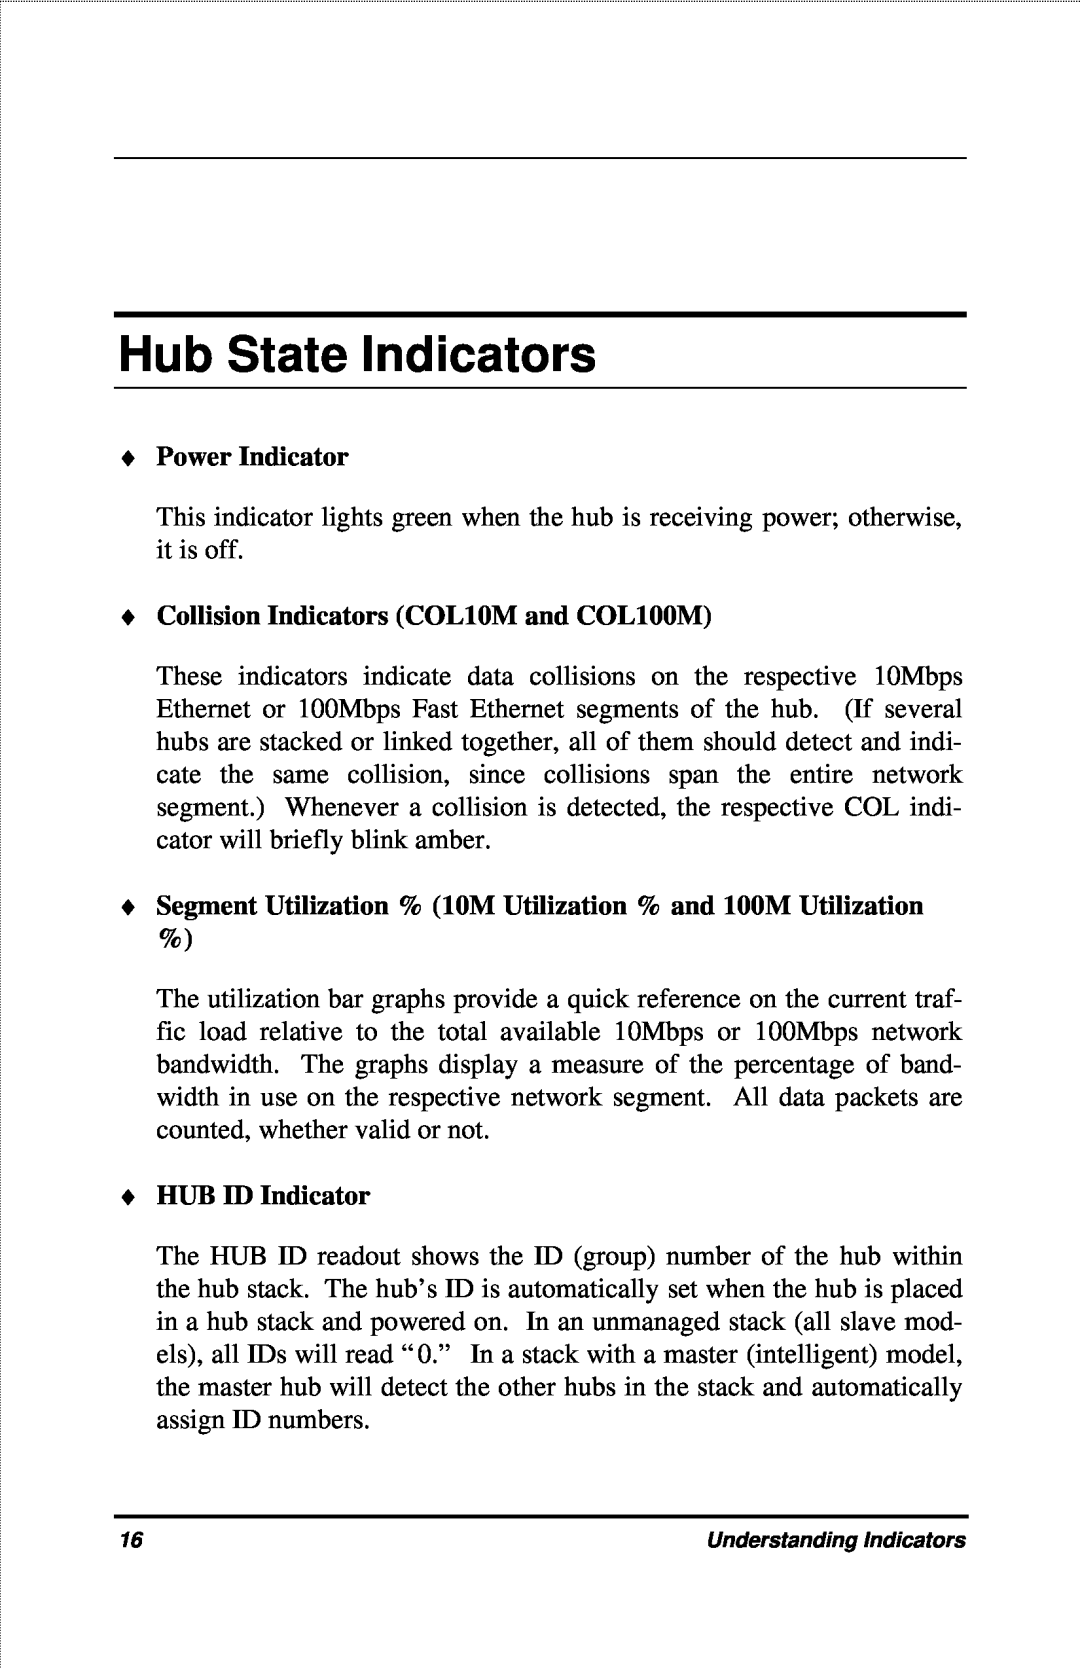 D-Link DFE-916X manual Hub State Indicators, Power Indicator, Collision Indicators COL10M and COL100M, HUB ID Indicator 